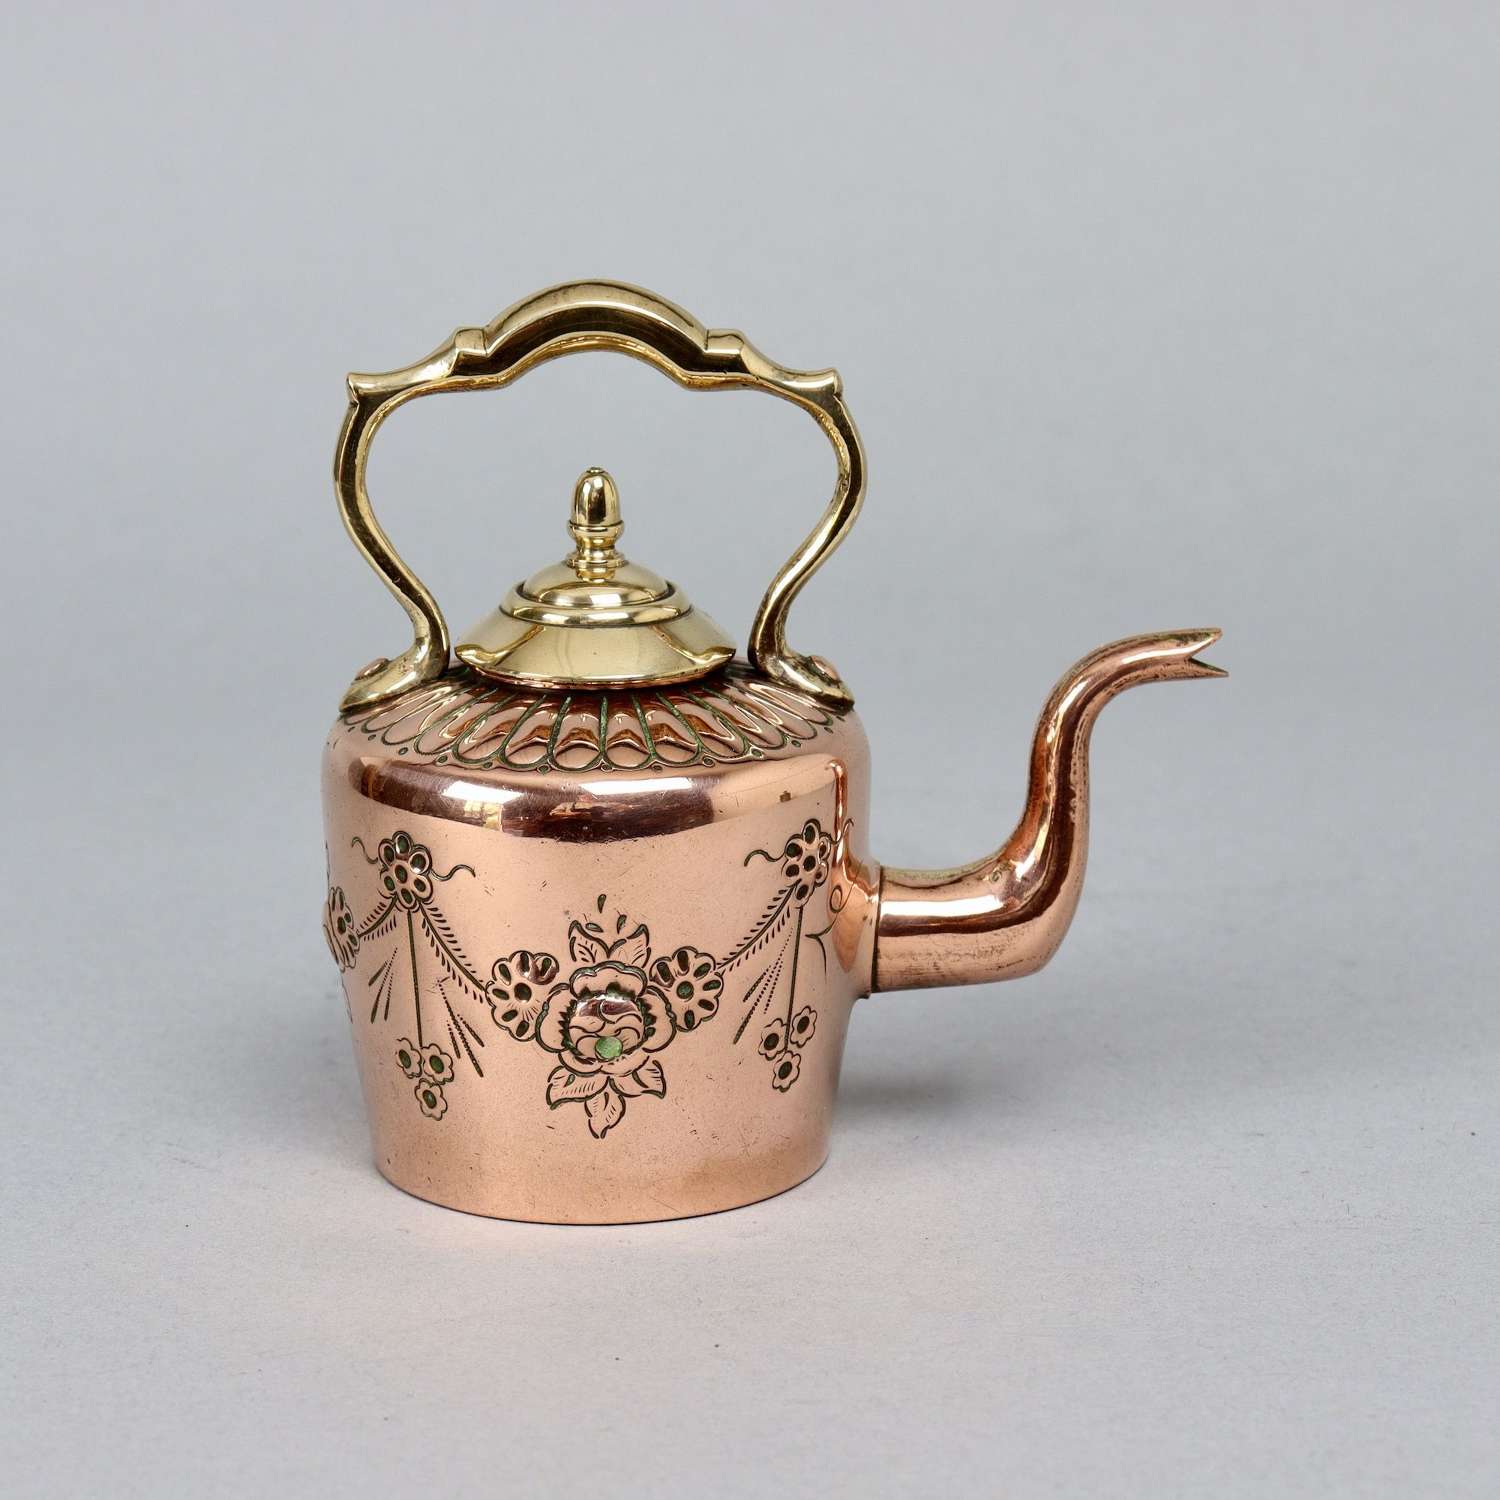 Miniature, Embossed, Copper Kettle